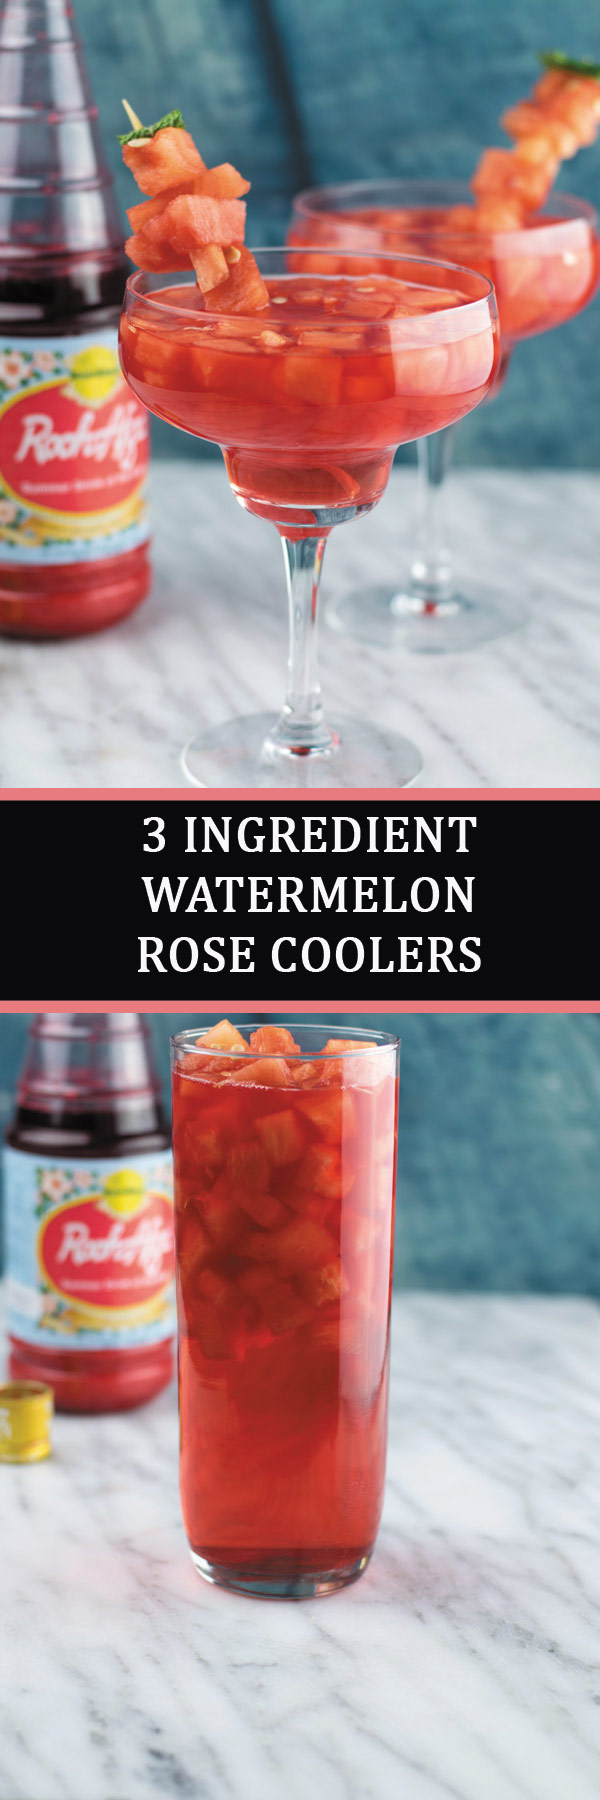 Watermelon Rose Coolers | NaiveCookCooks.com